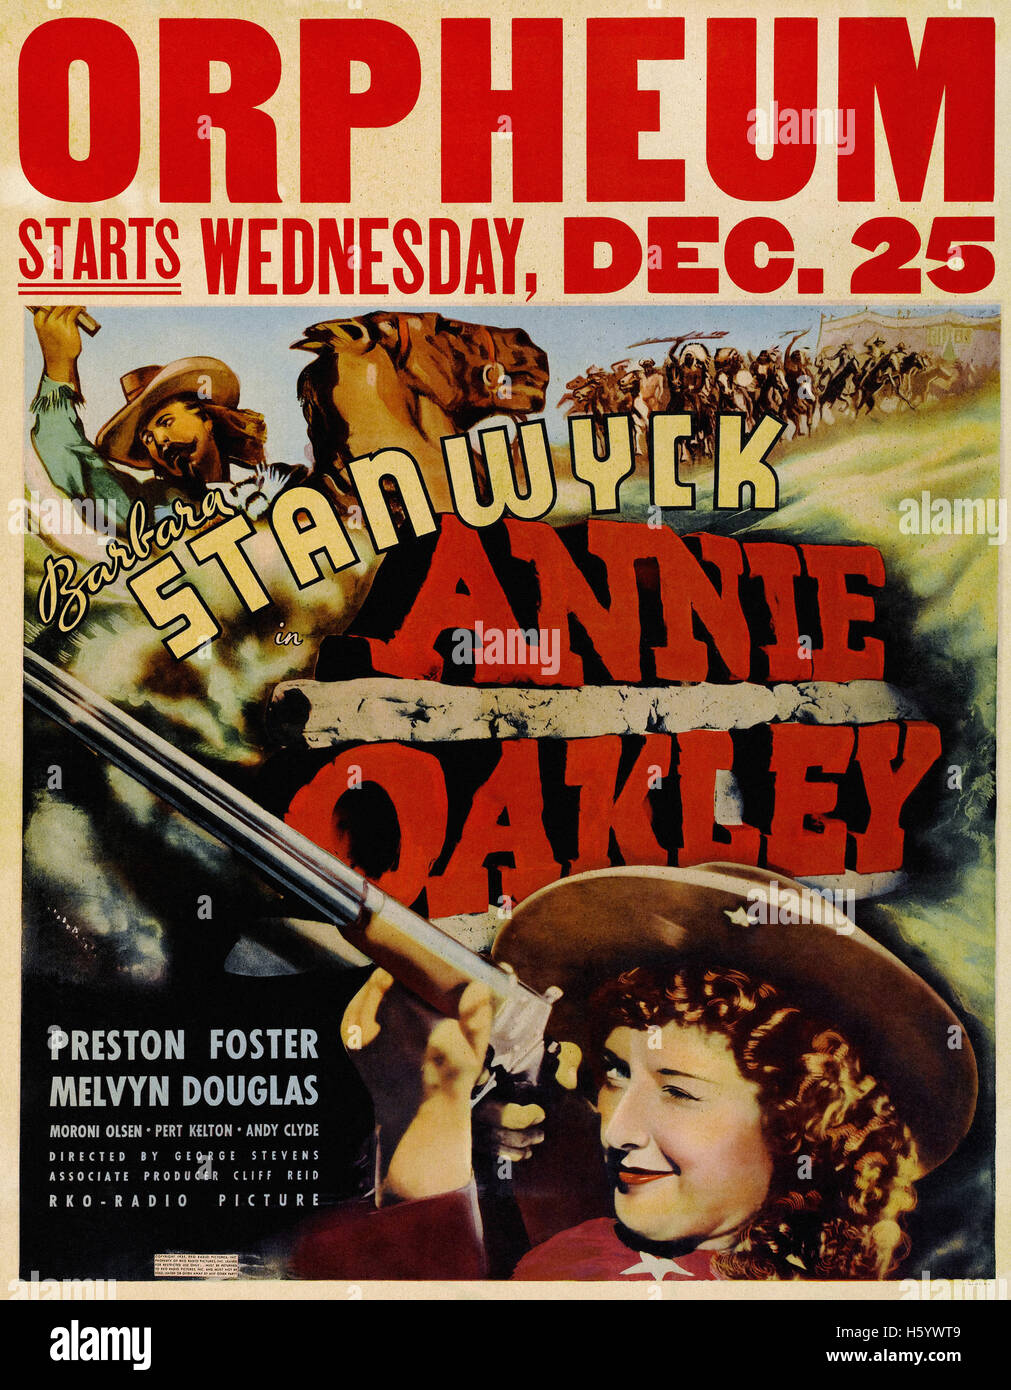 Annie Oakley (1935) - Movie Poster Stock Photo - Alamy